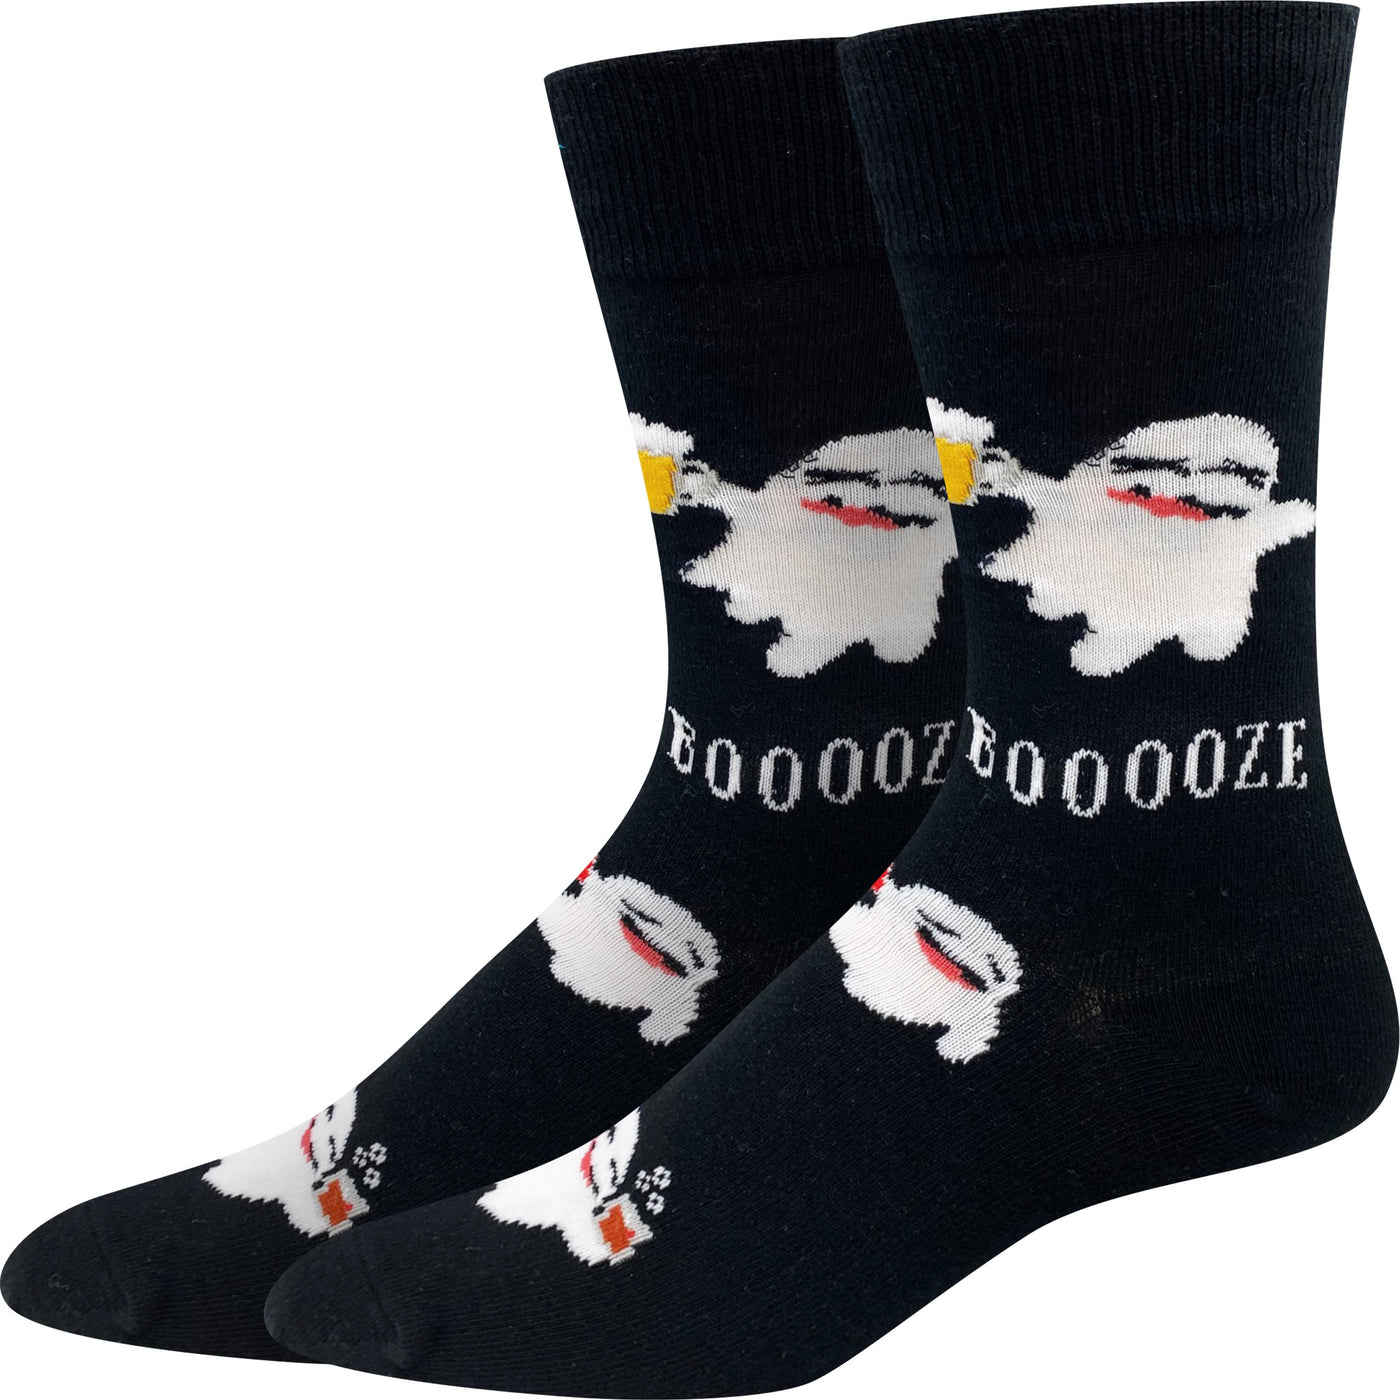 Booooze Socks